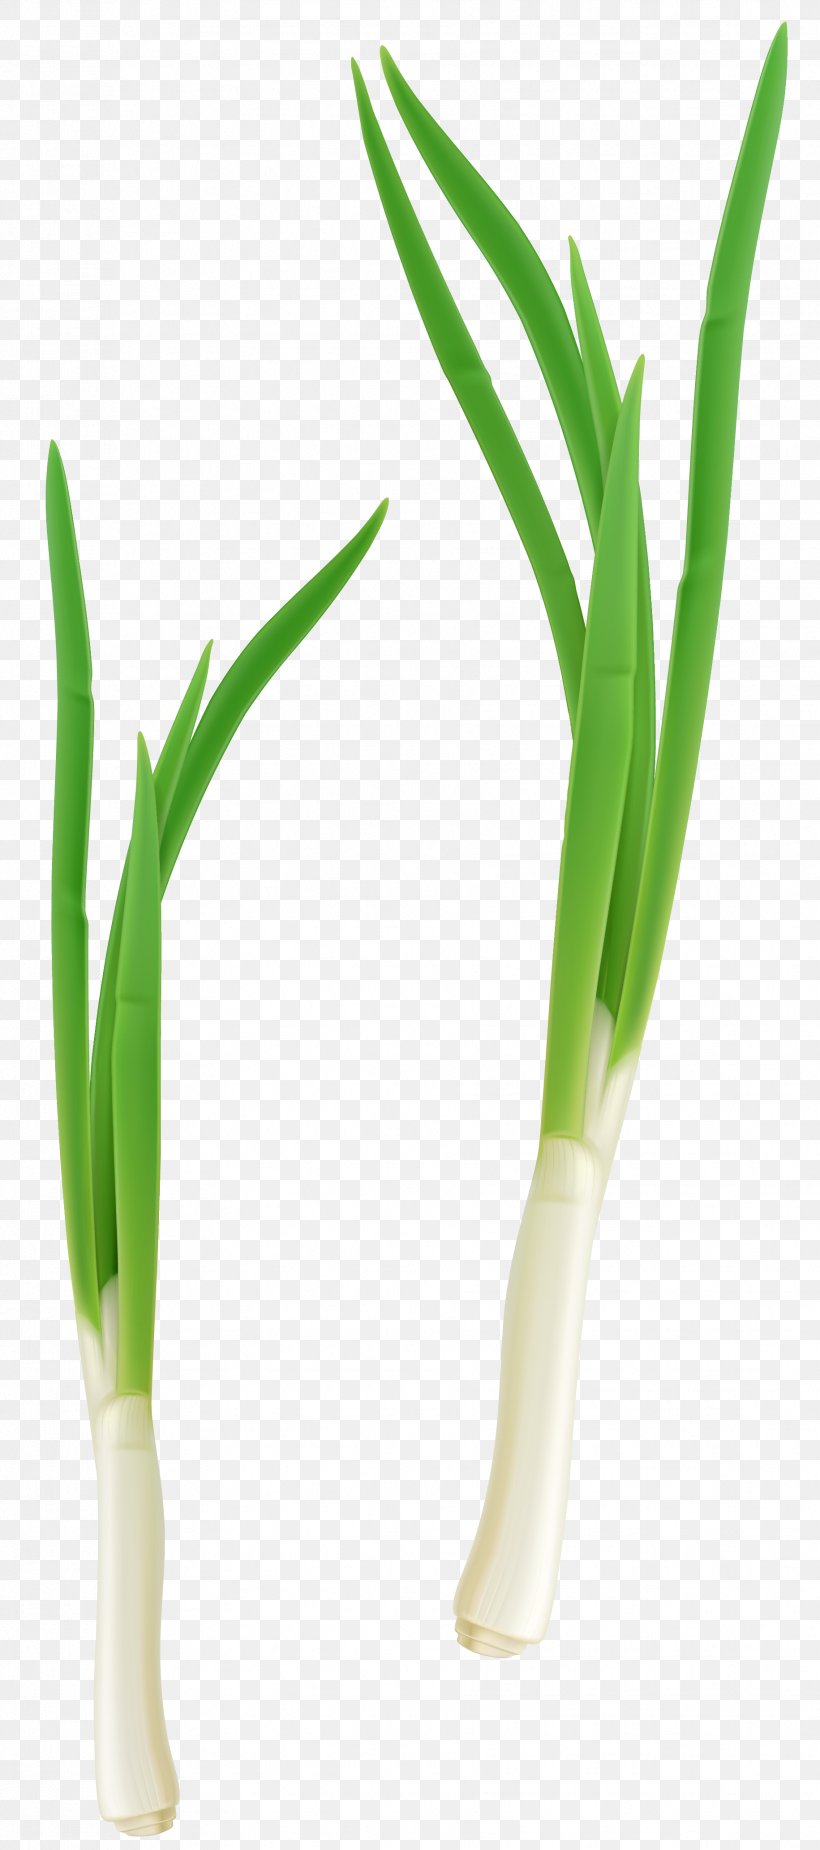 French Onion Soup Shallot Scallion Vegetable Allium Fistulosum, PNG, 1831x4131px, French Onion Soup, Allium Fistulosum, Broccoli, Commodity, Flowerpot Download Free